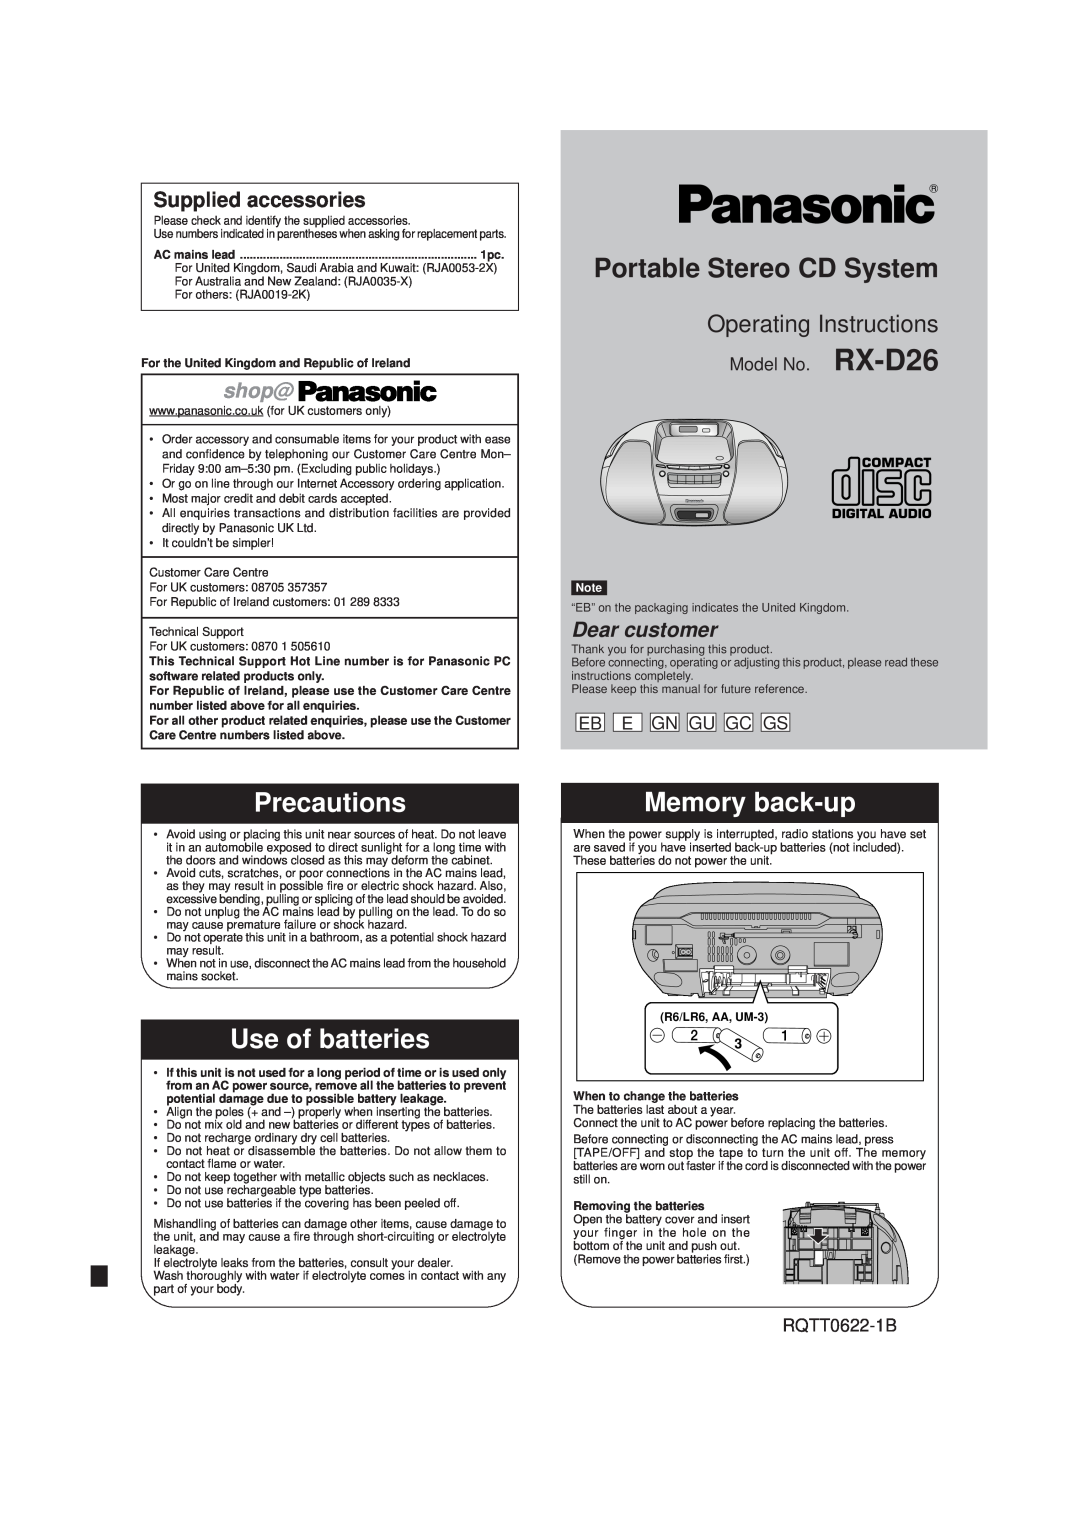 Panasonic manual Precautions, Use of batteries, Memory back-up, Supplied accessories, Model No. RX-D26, Eb E Gngugcgs 